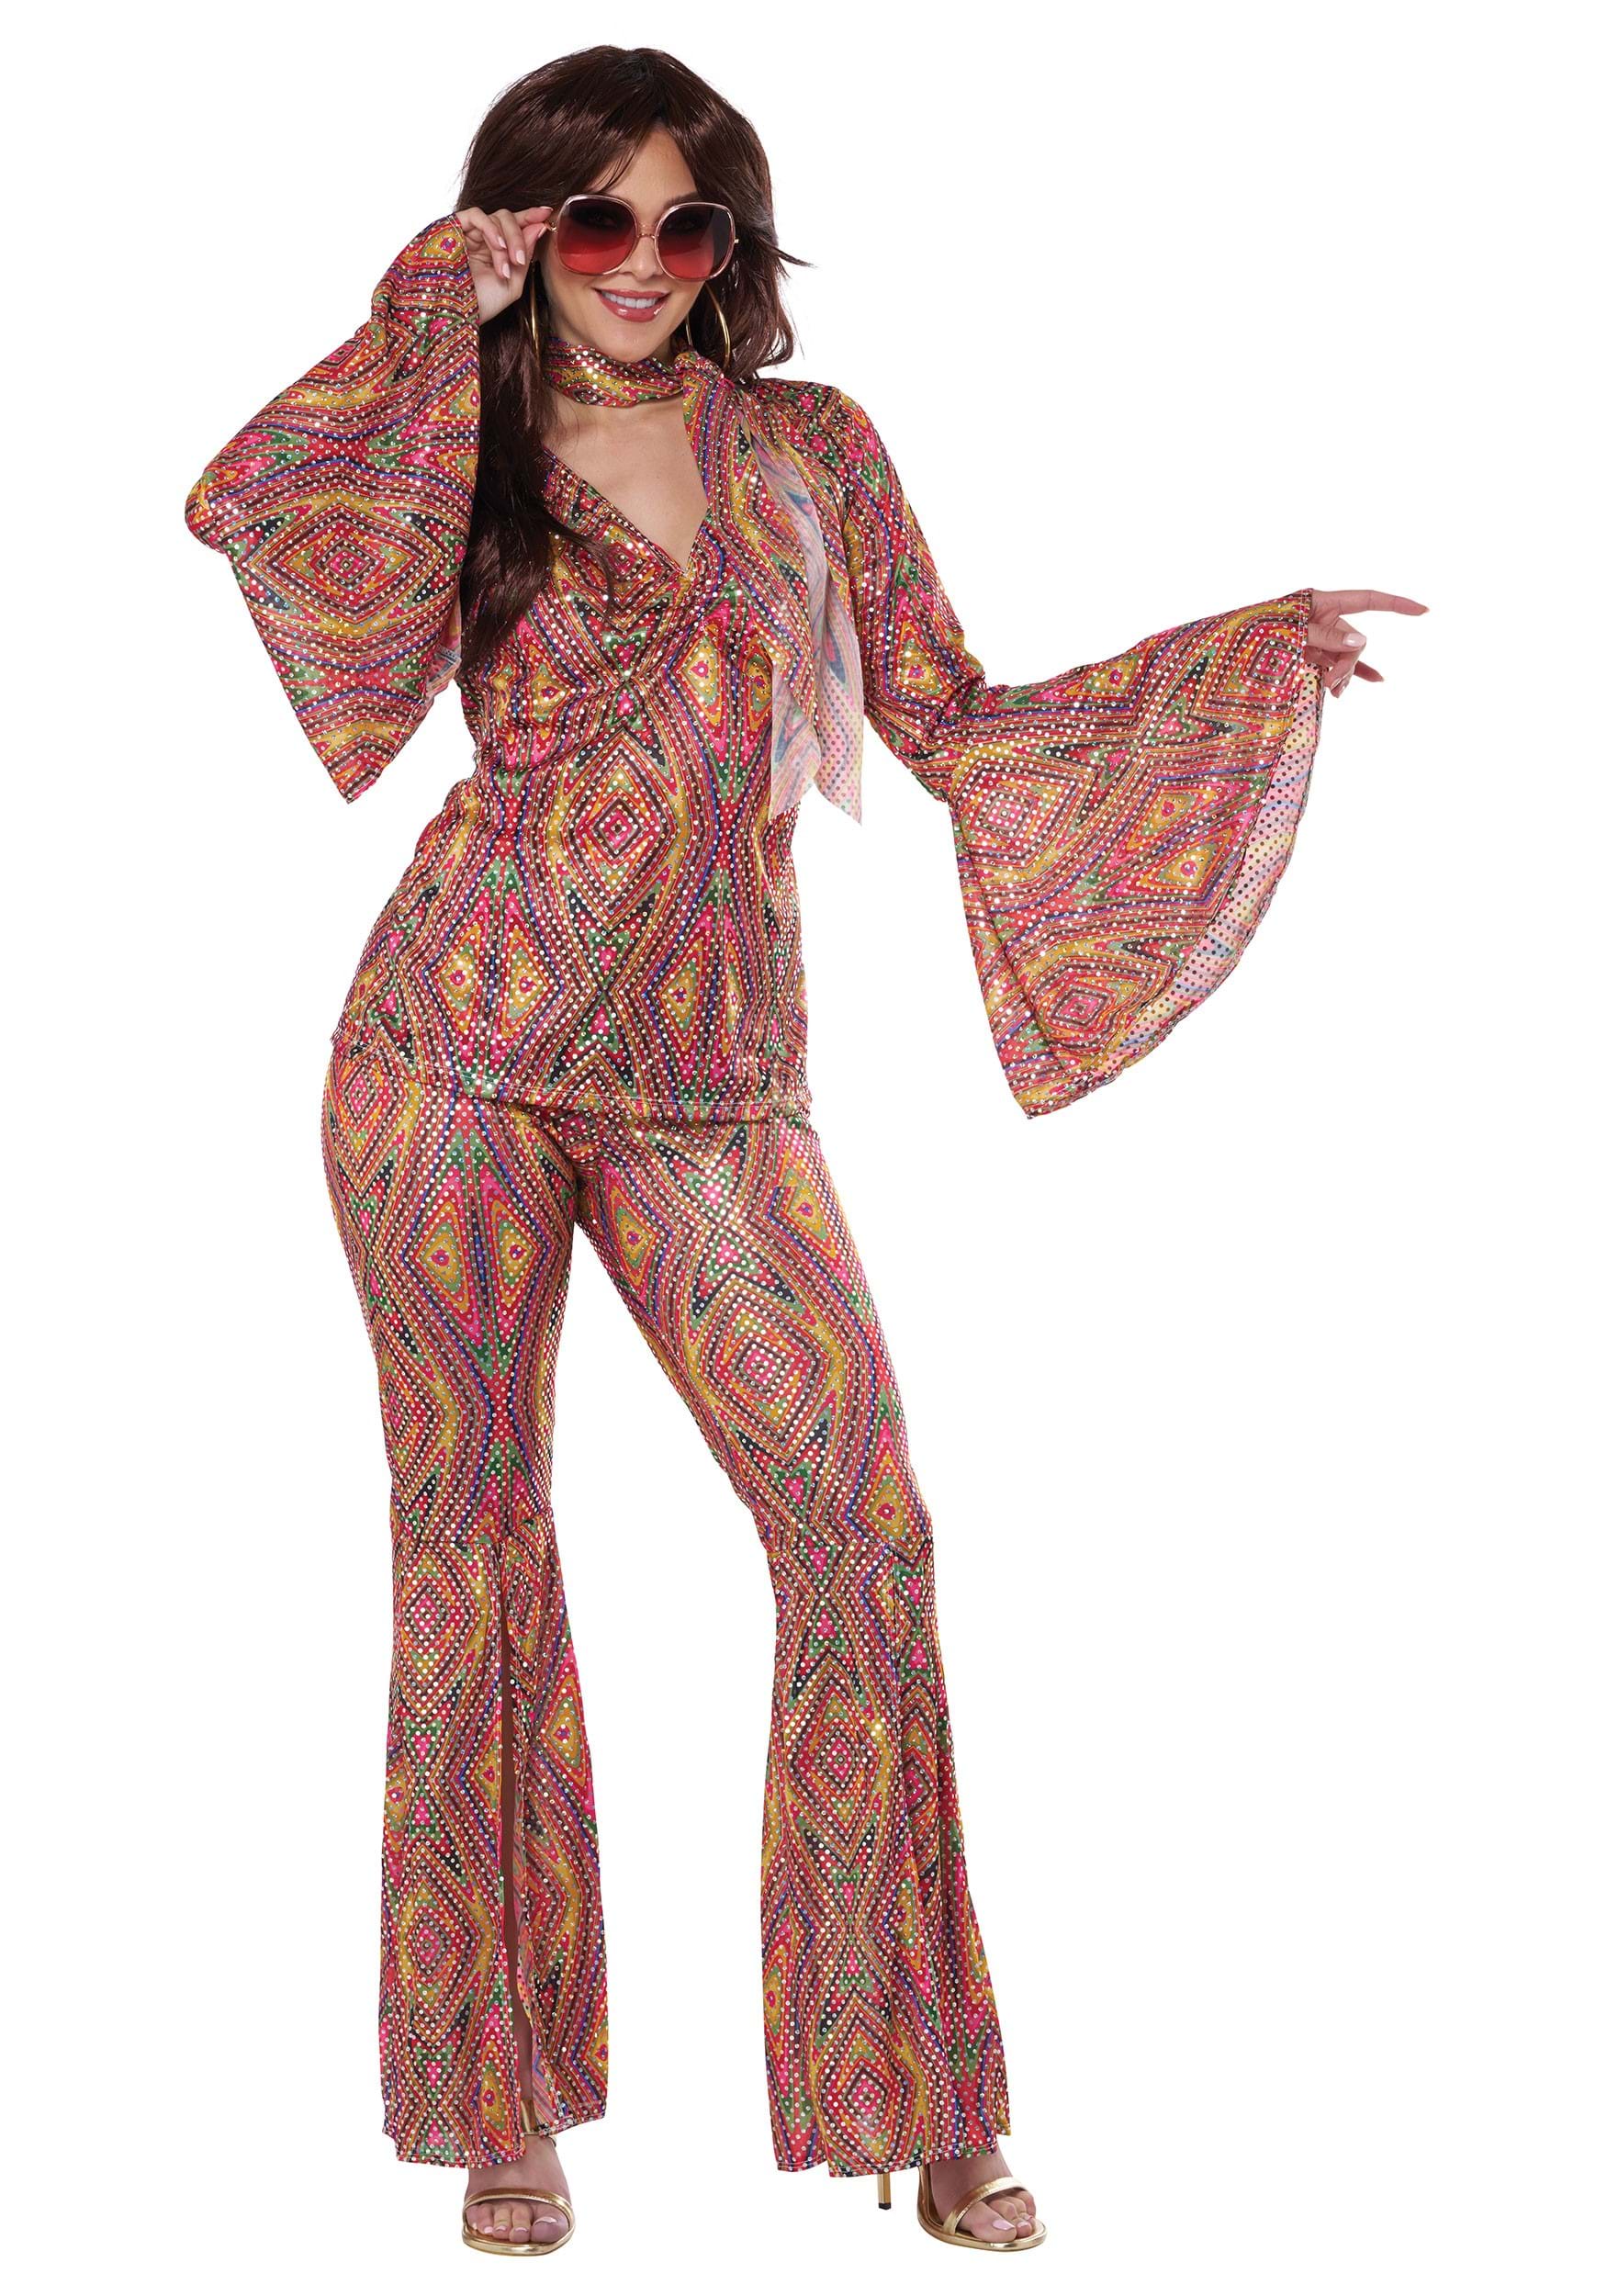 Women's 1970s DiscoLicious Costume